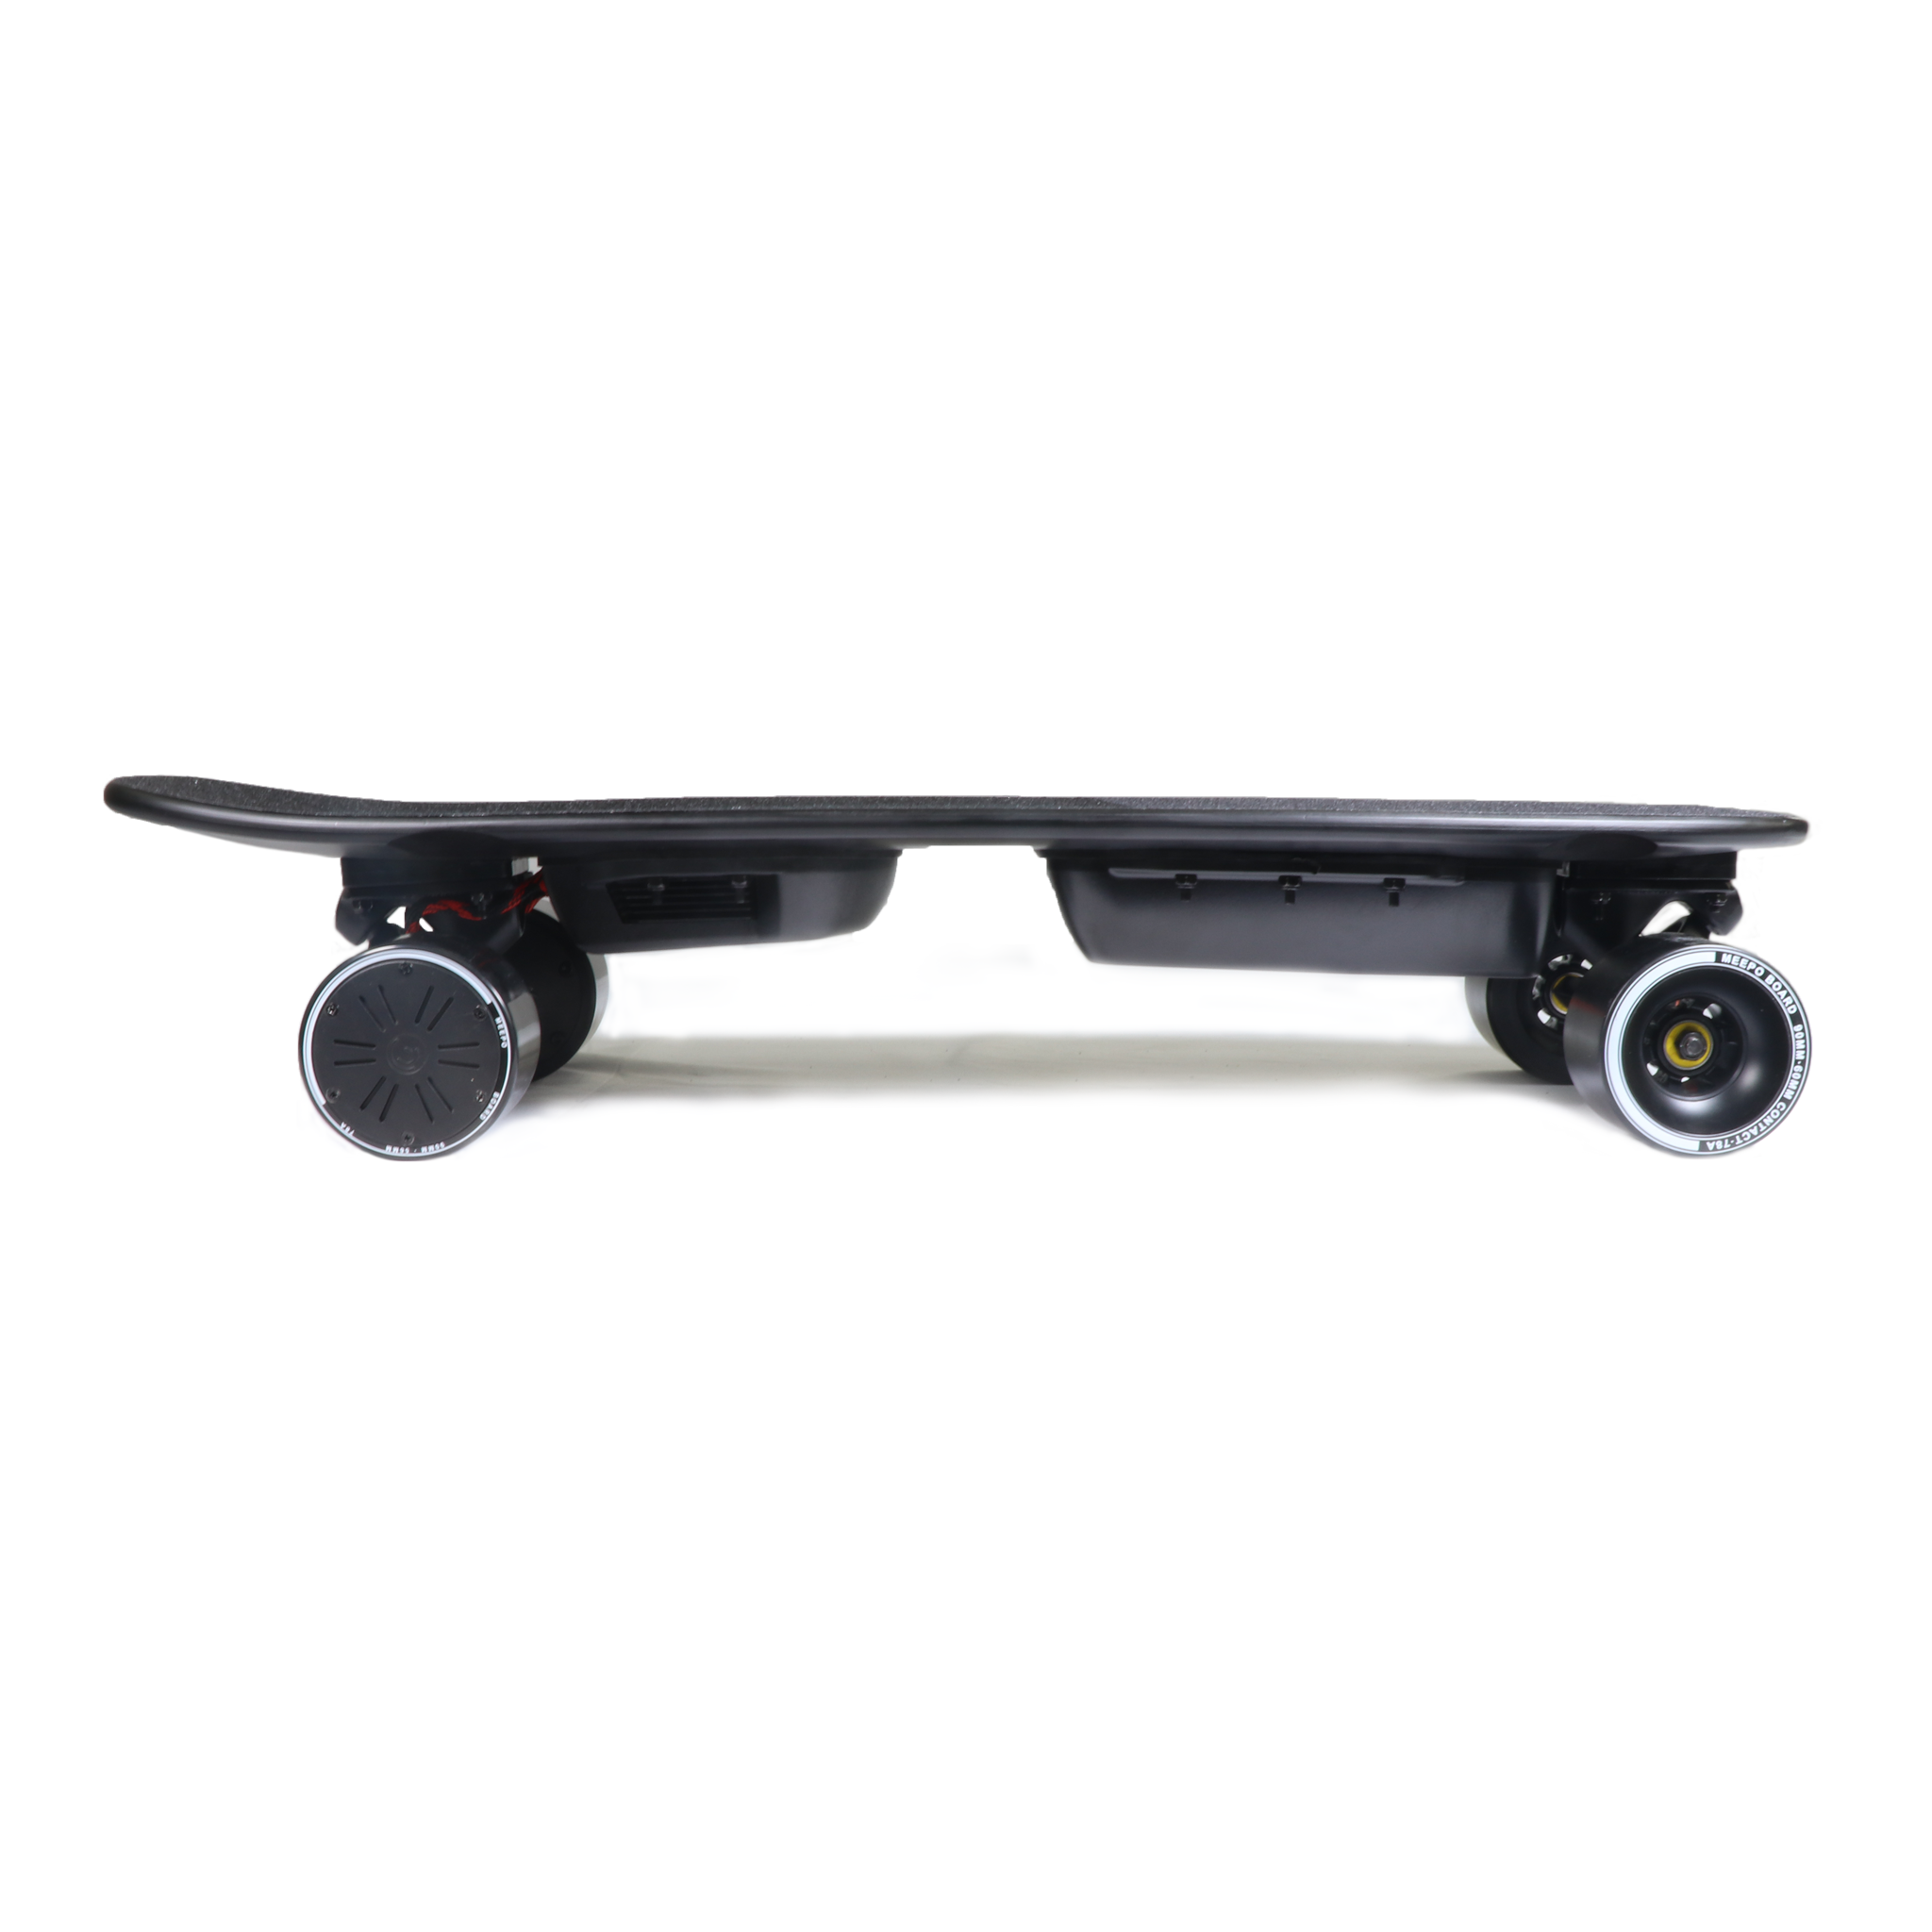 Meepo Mini 2 Electric Skateboard Side View - Electric Skateboard Shortboard Side View